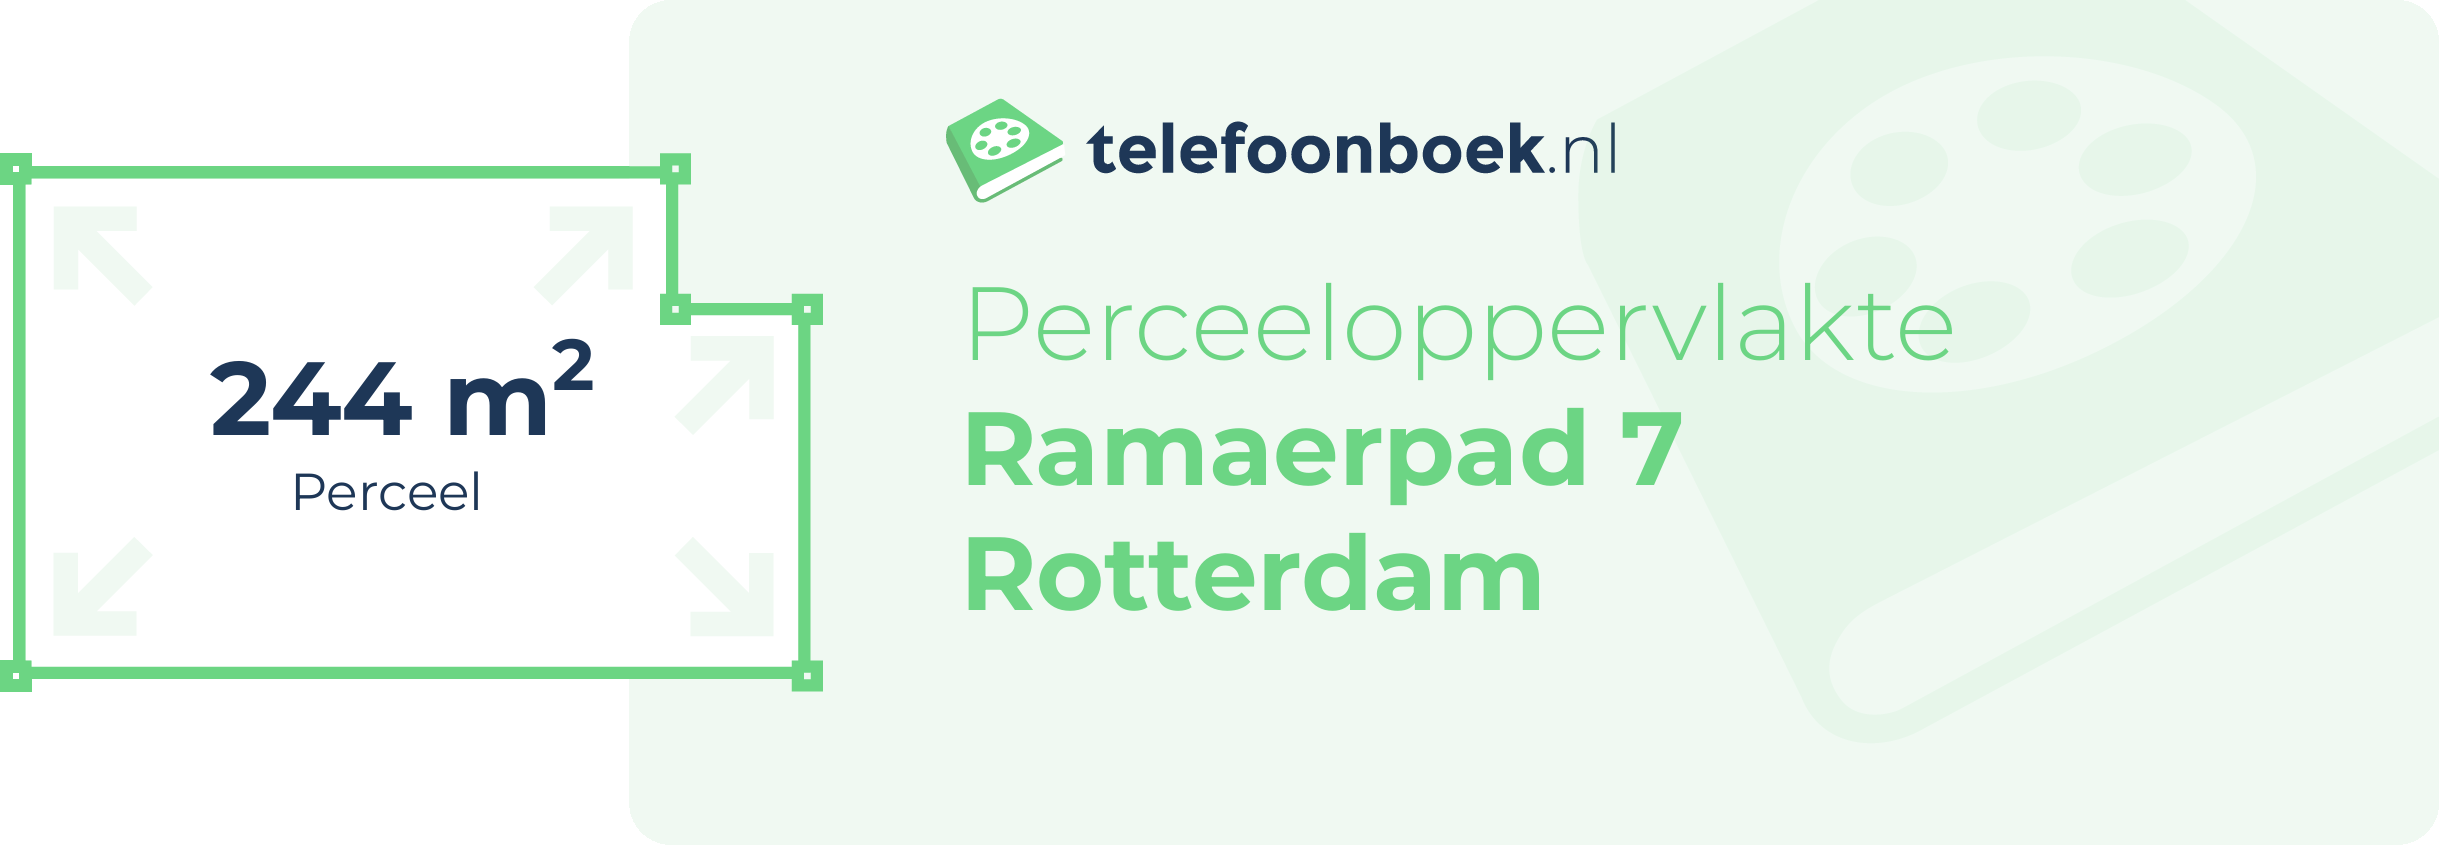 Perceeloppervlakte Ramaerpad 7 Rotterdam